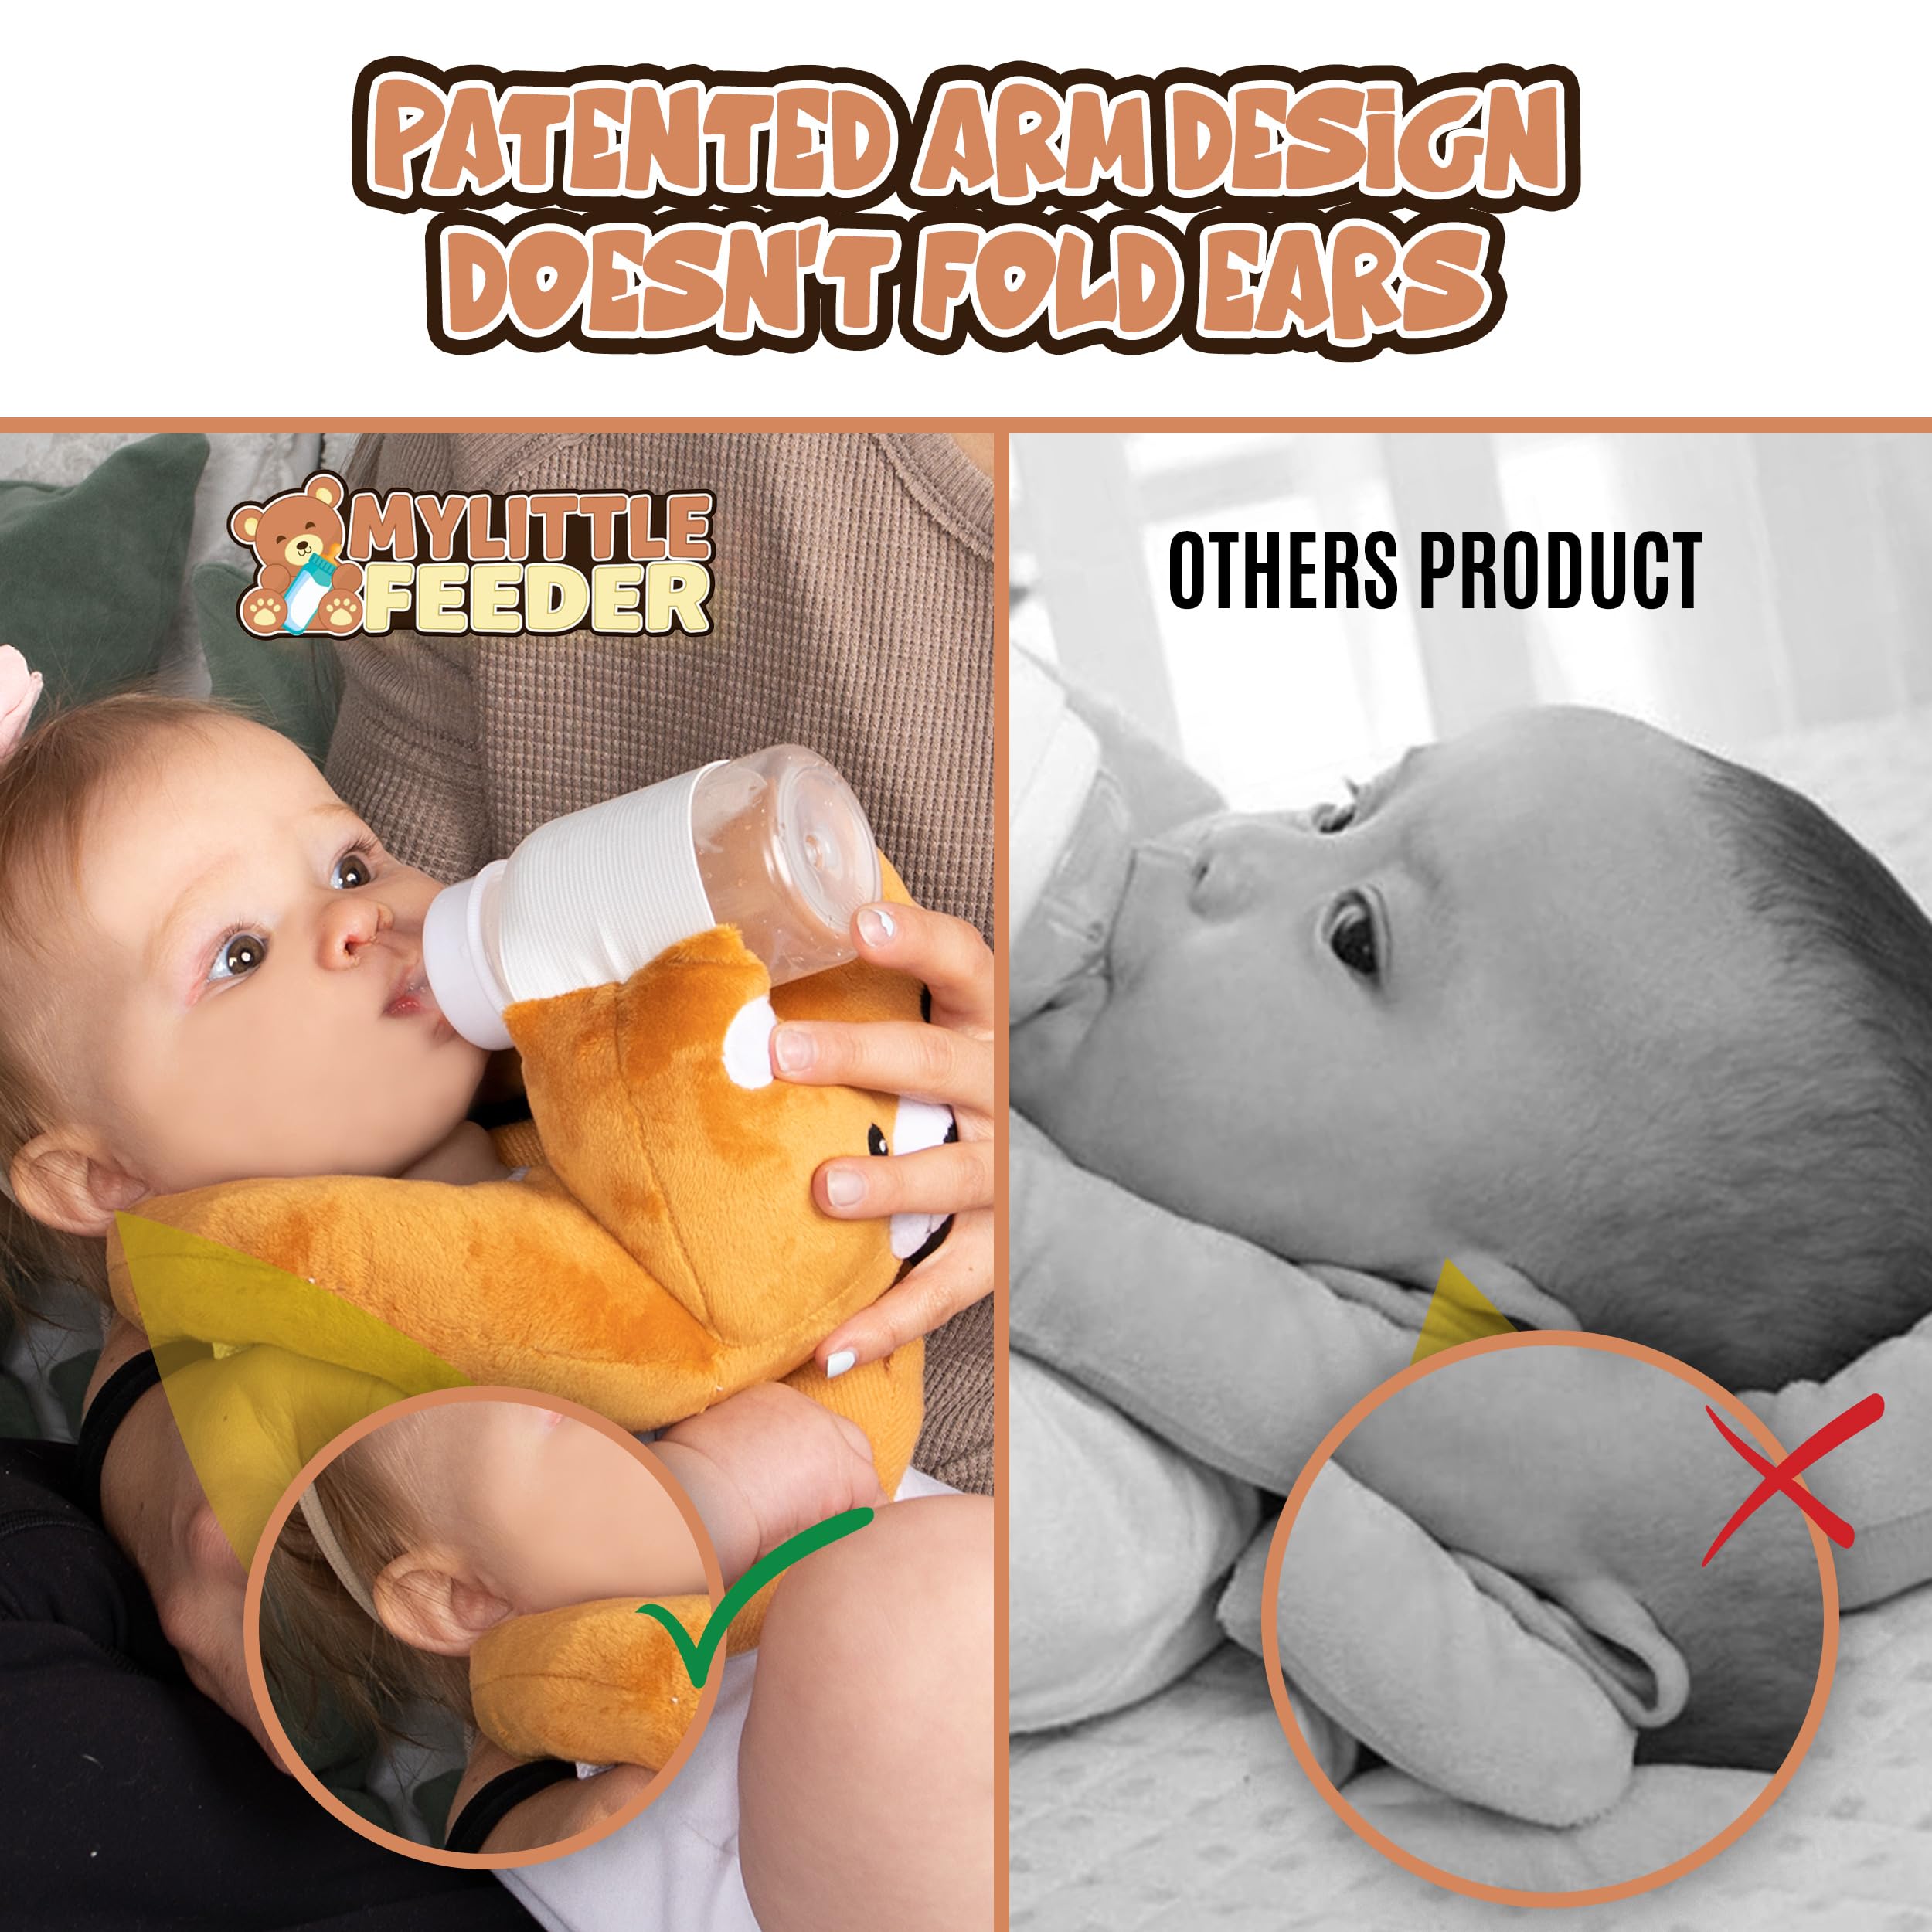 New Baby Bottle Holder, Adjustable Nursing Pillow Support, Newborn Essentials, Infant Bottle Feeding, Baby Essentials, Hands Free Bottle Holder for Baby, Bottle Propper for Baby (Shiba)